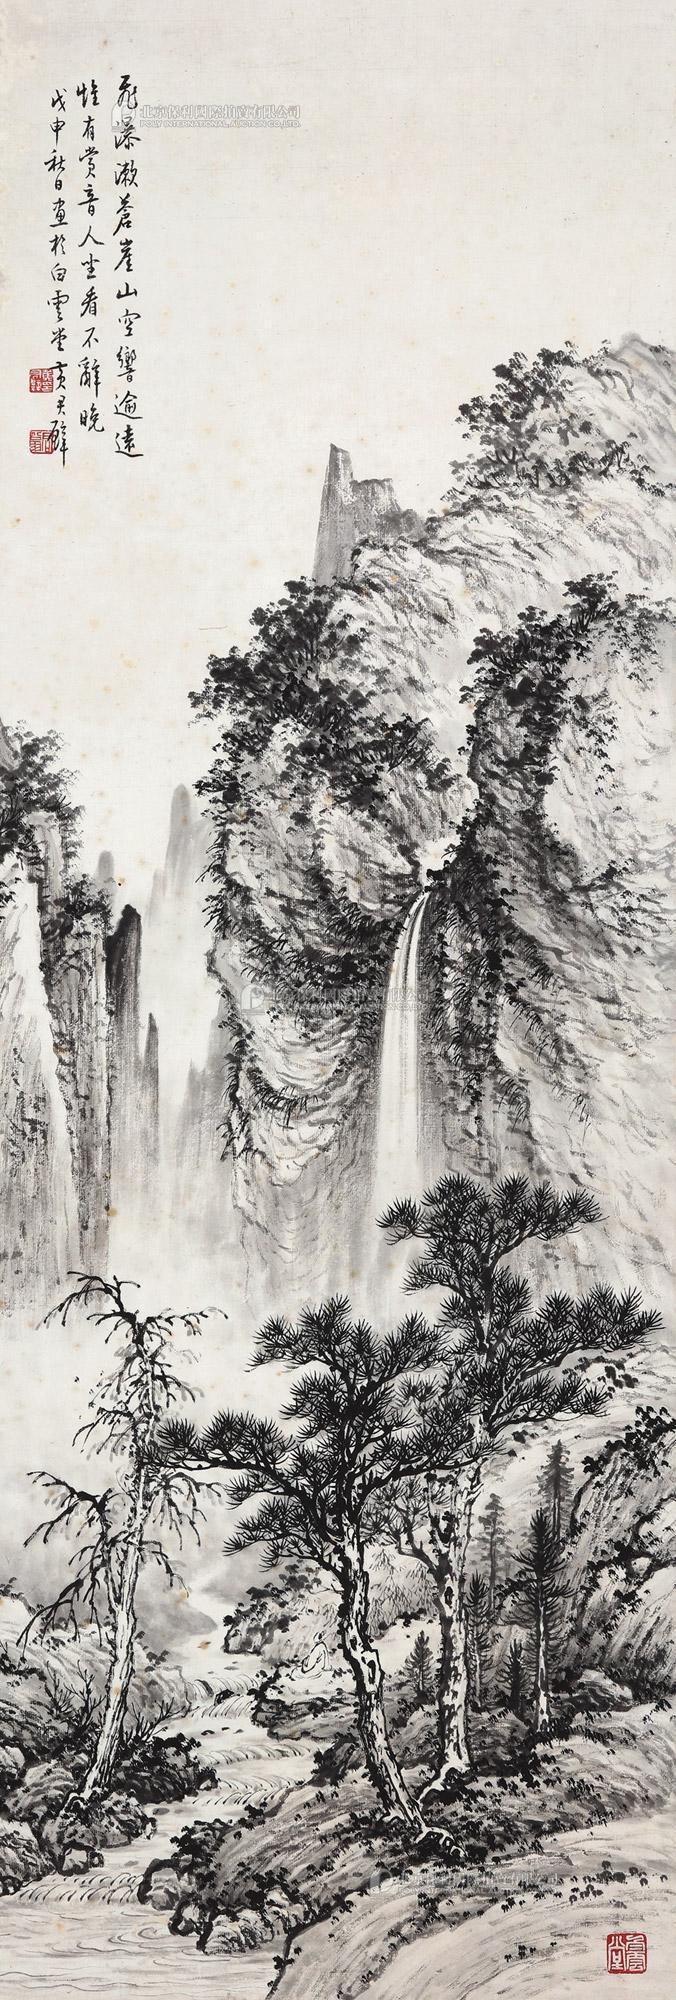 Waterfall by Huang Junbi, Dated 1968